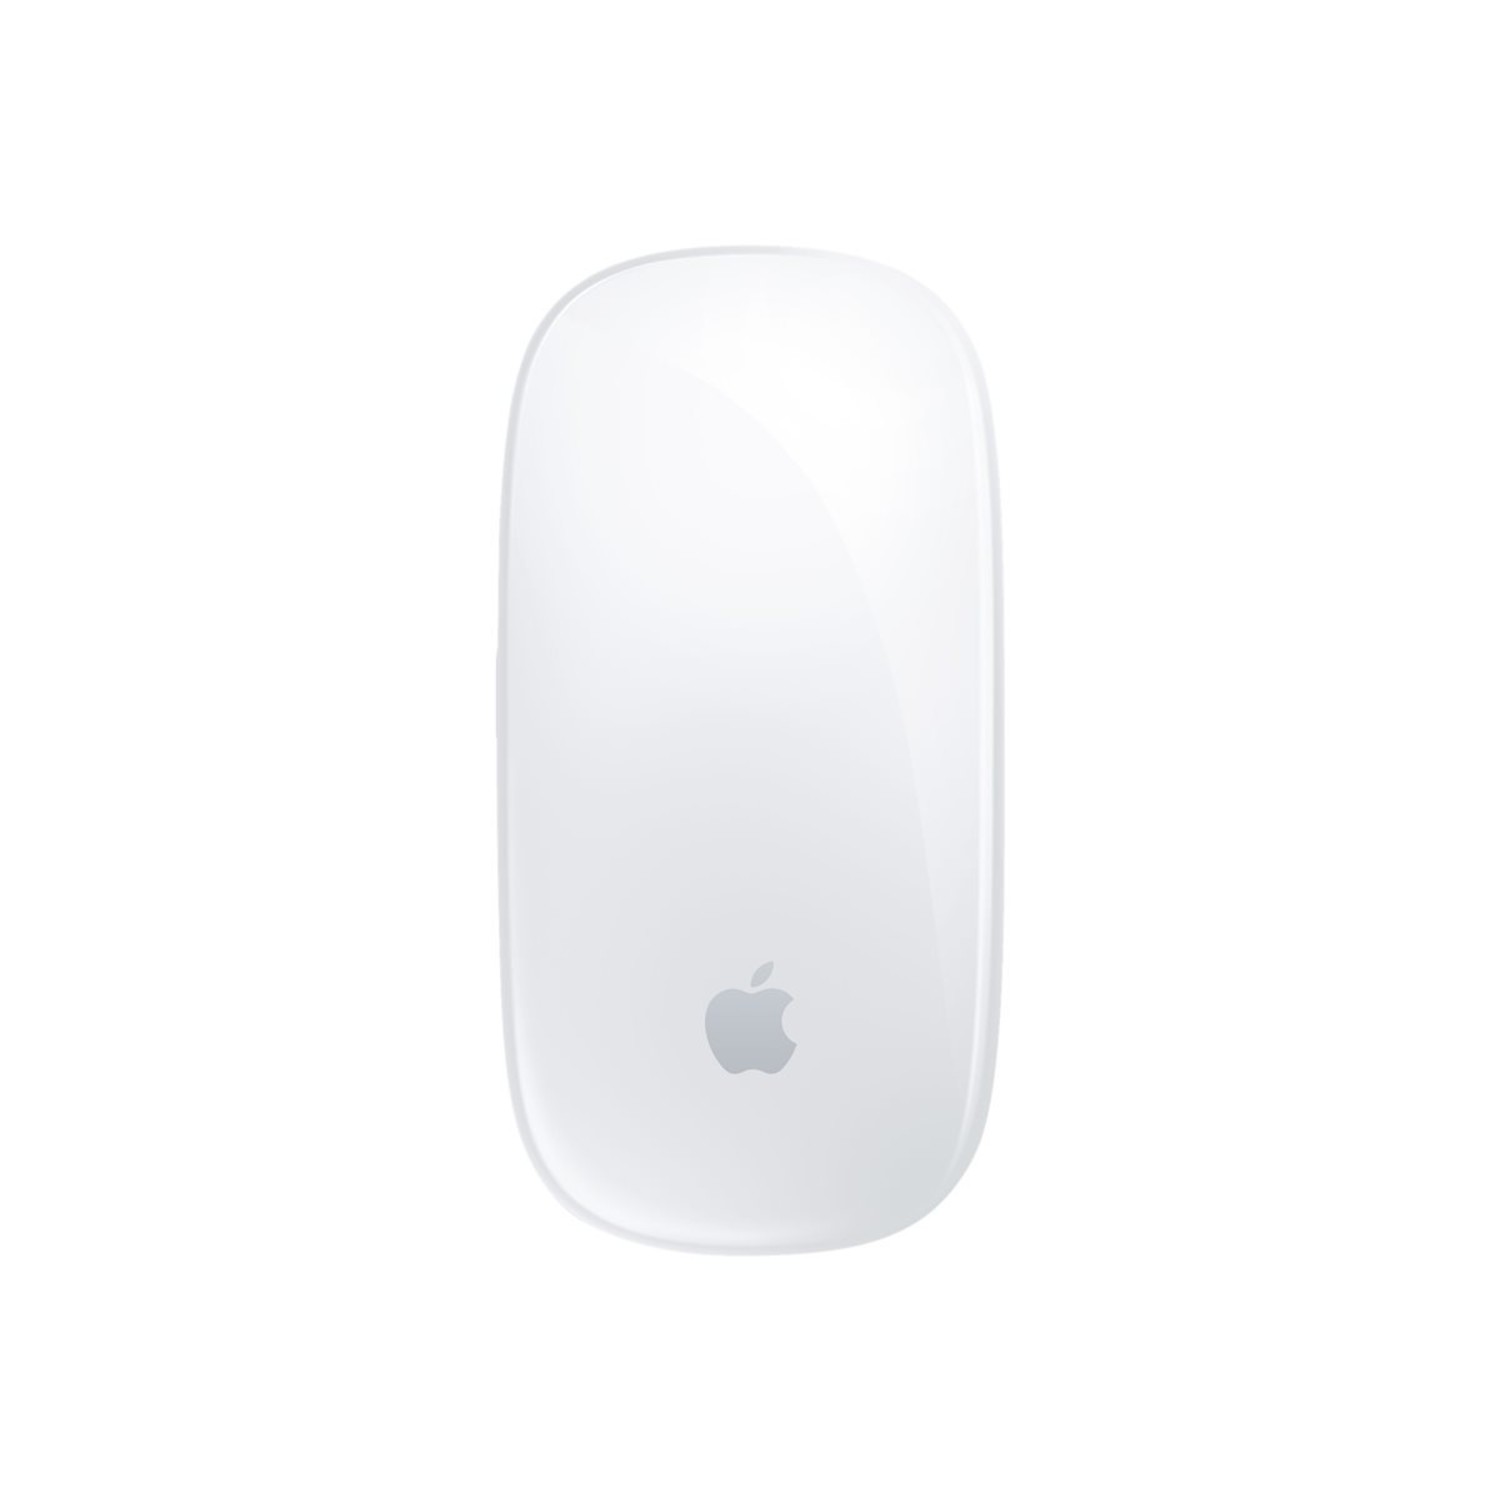 Skalk Schaken Additief Apple Magic Mouse 3 - BoXXer